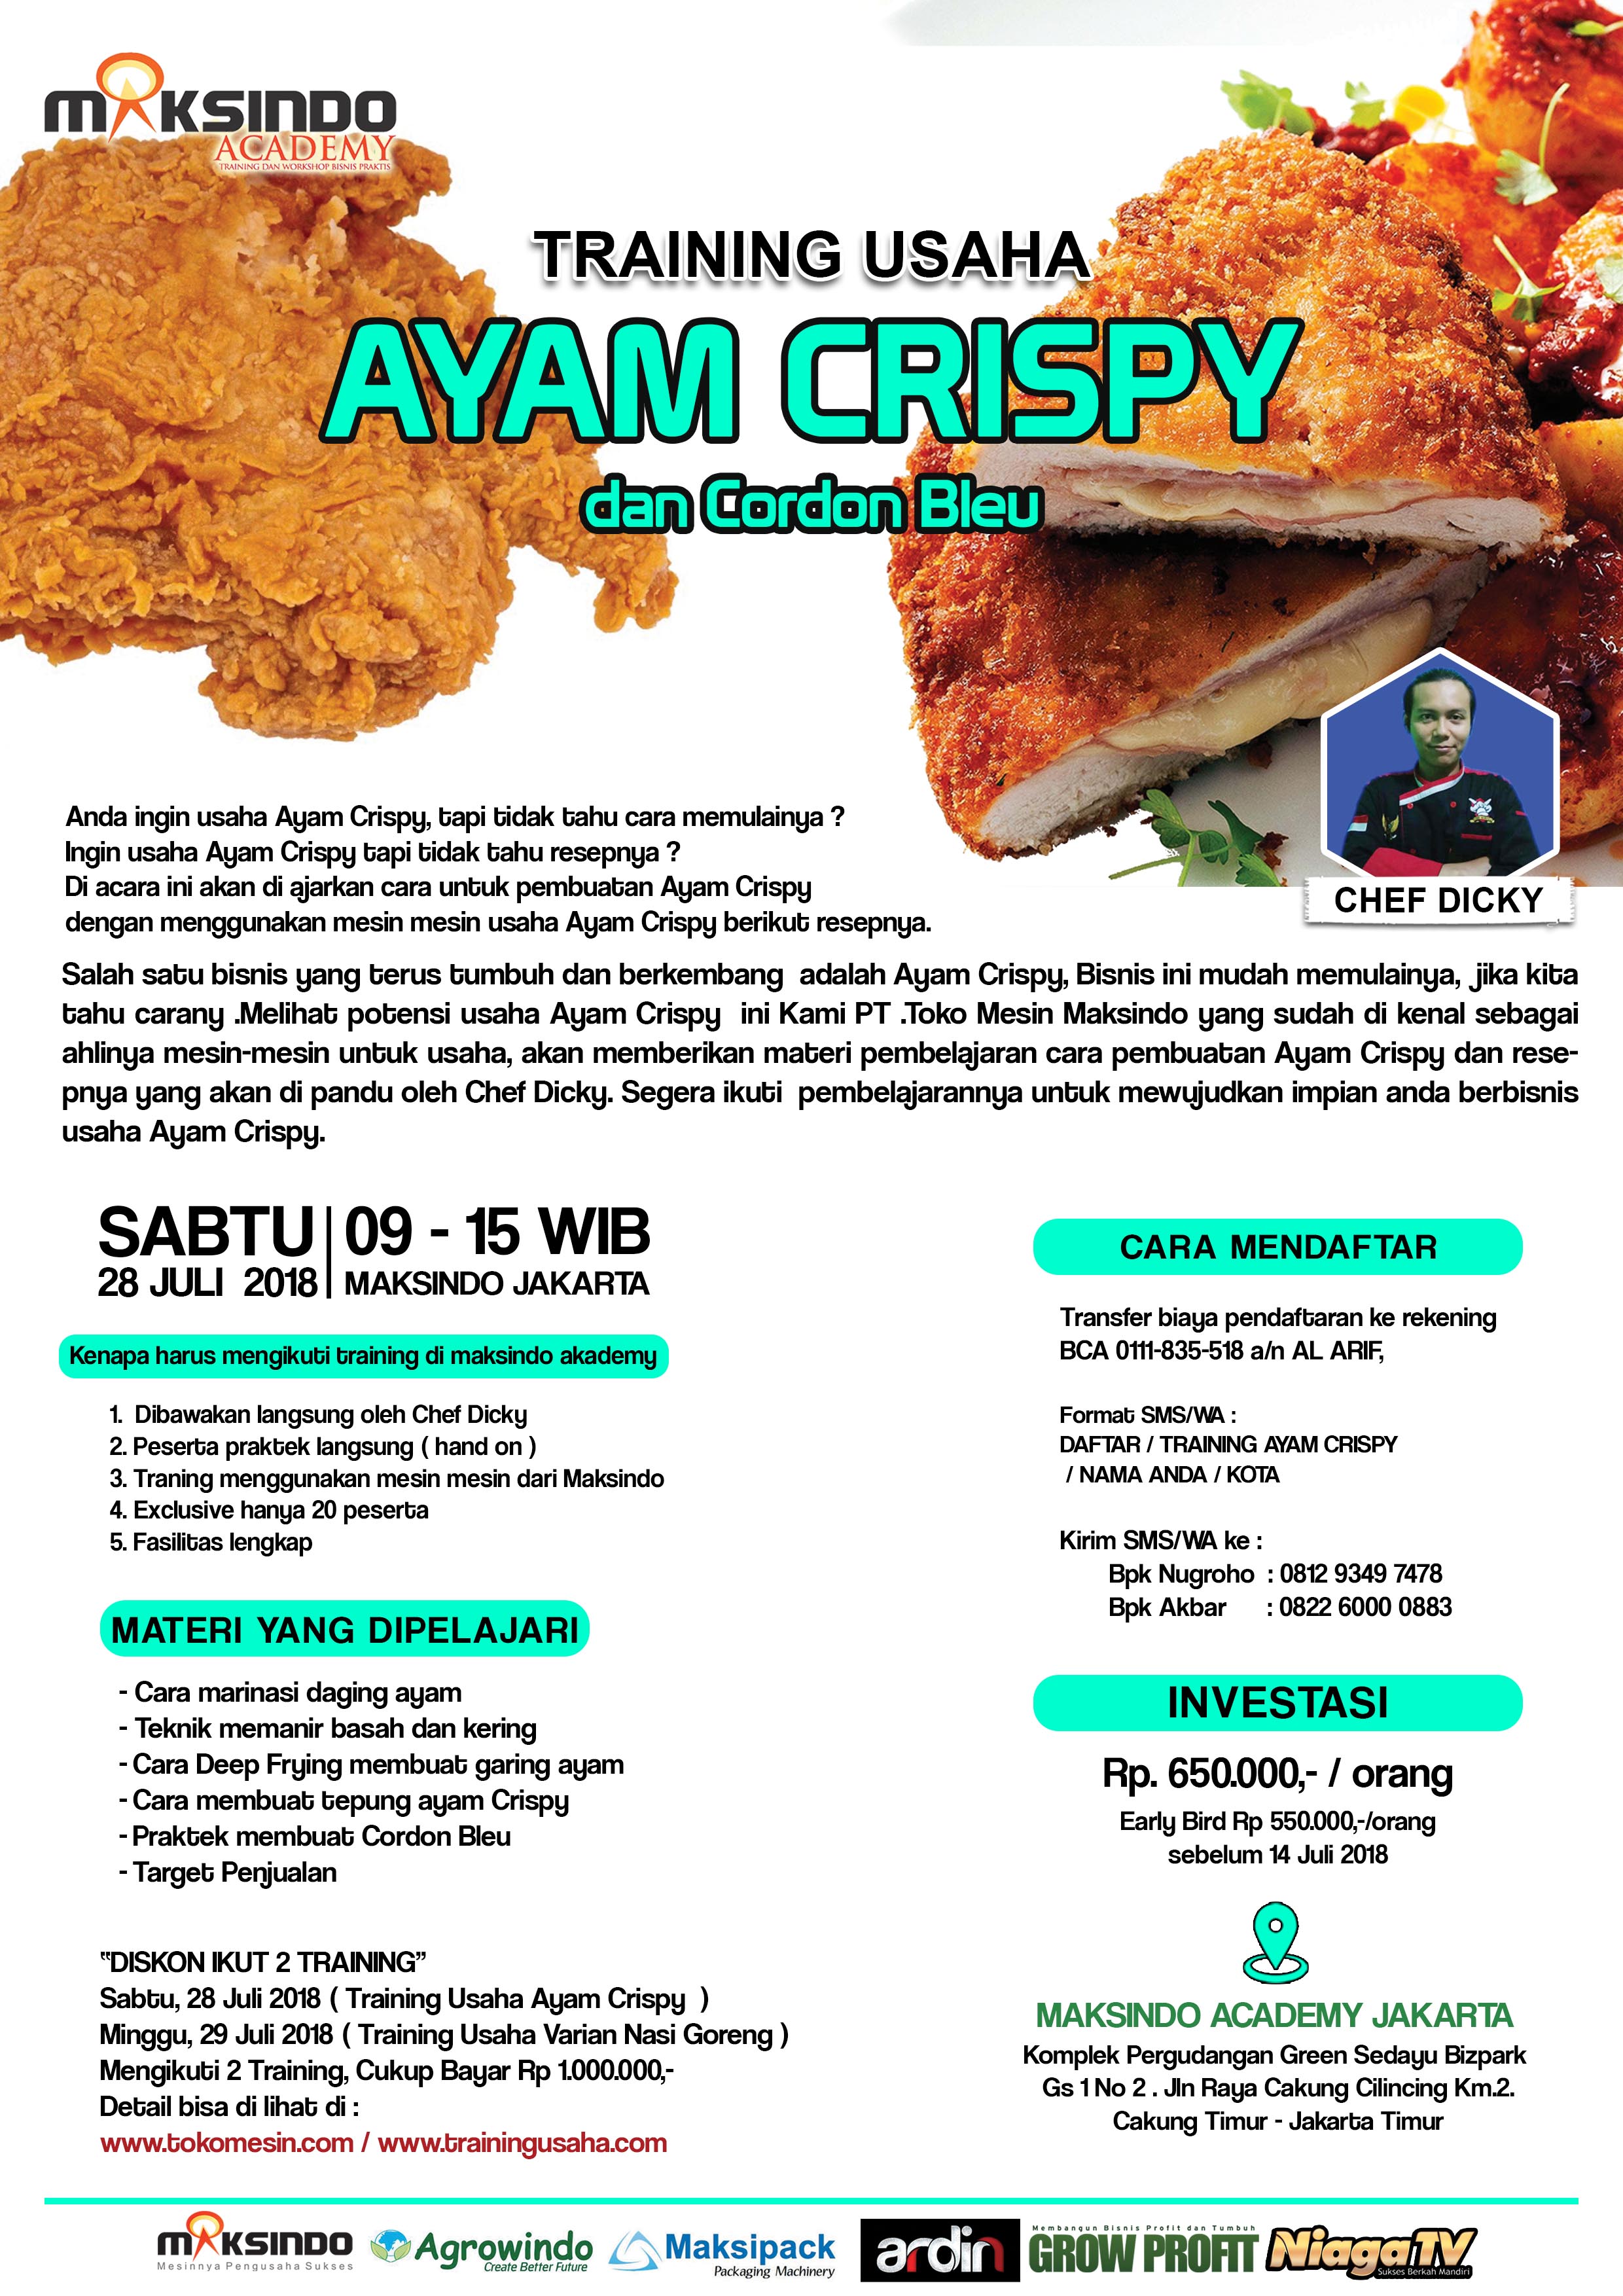 Training Usaha Ayam Crispy dan Cordon Bleu, 28 Juli 2018